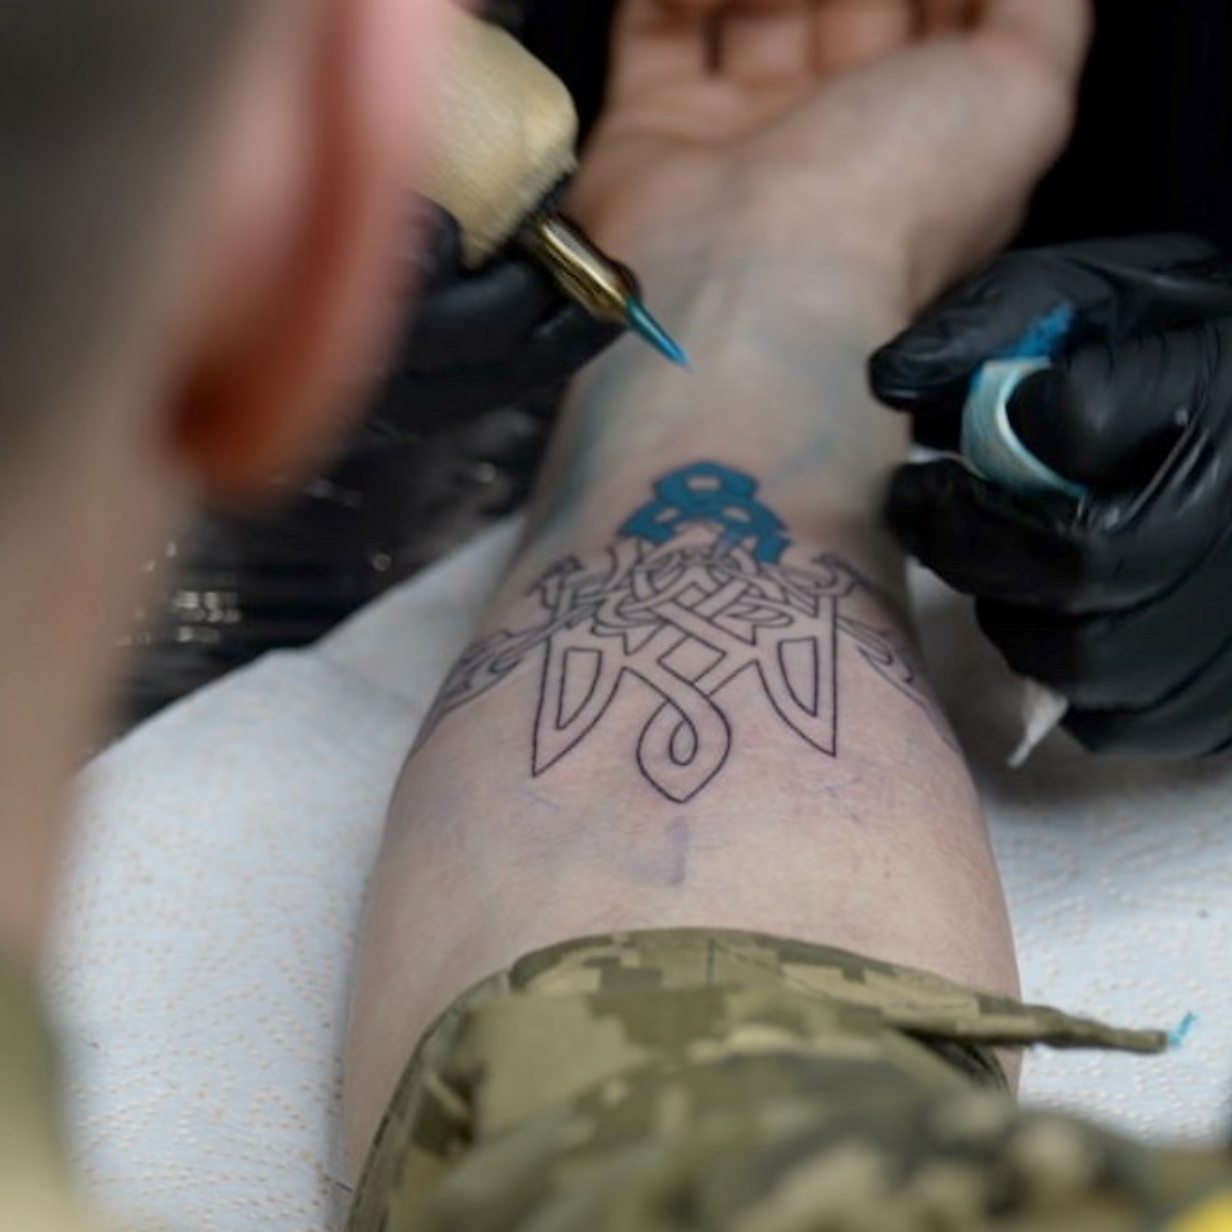 Patriotic tattoos, billboards popular in Ukraine | 11alive.com